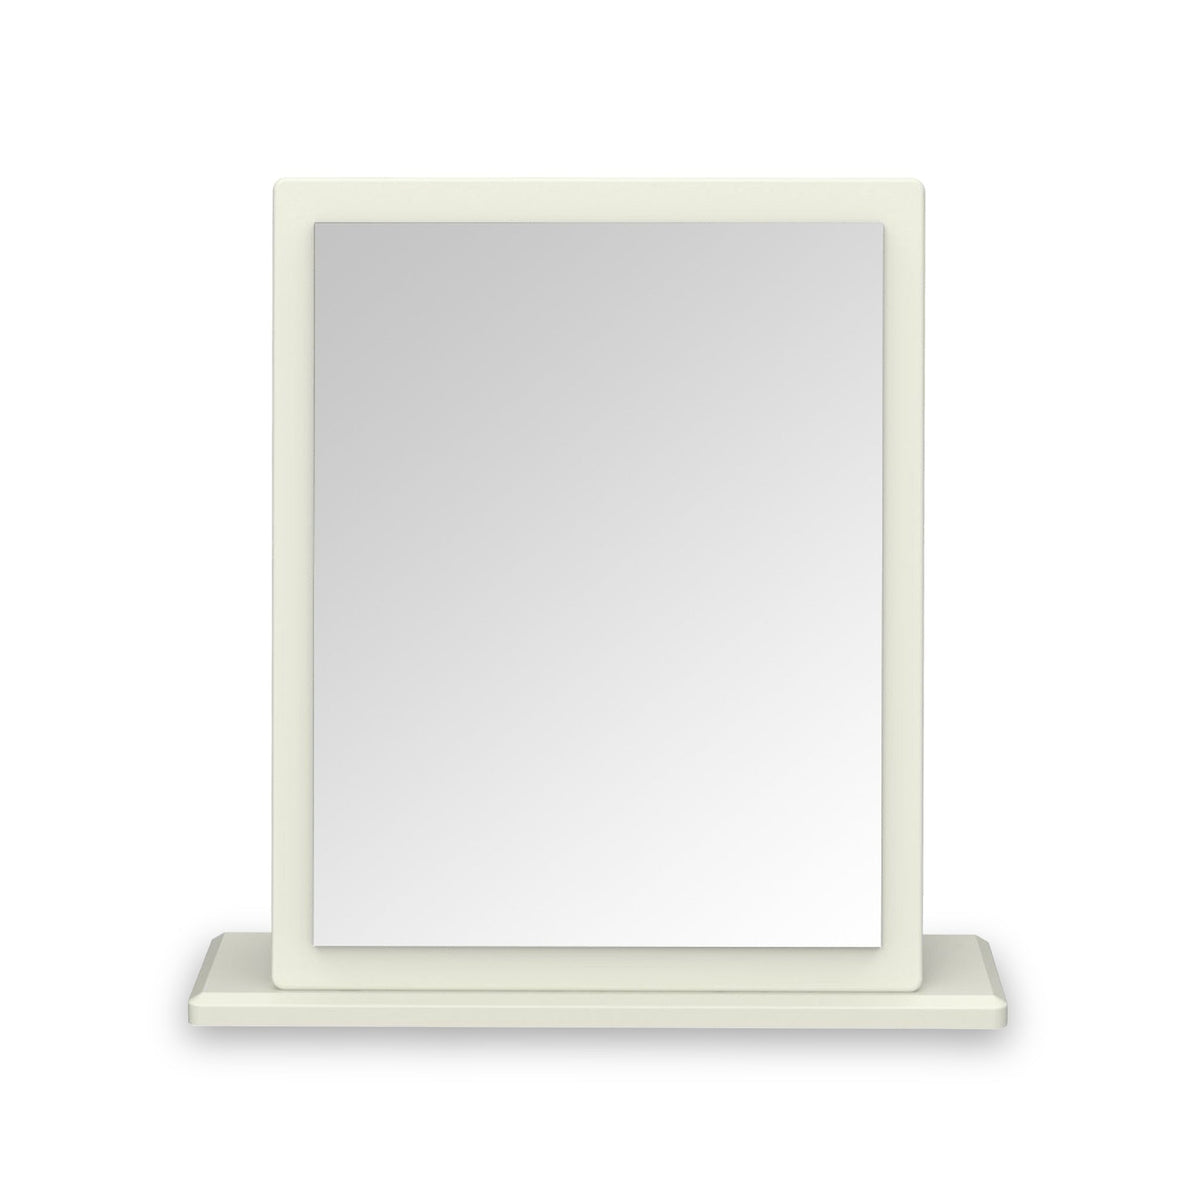 Beckett Cream Gloss Table Top Mirror from Roseland